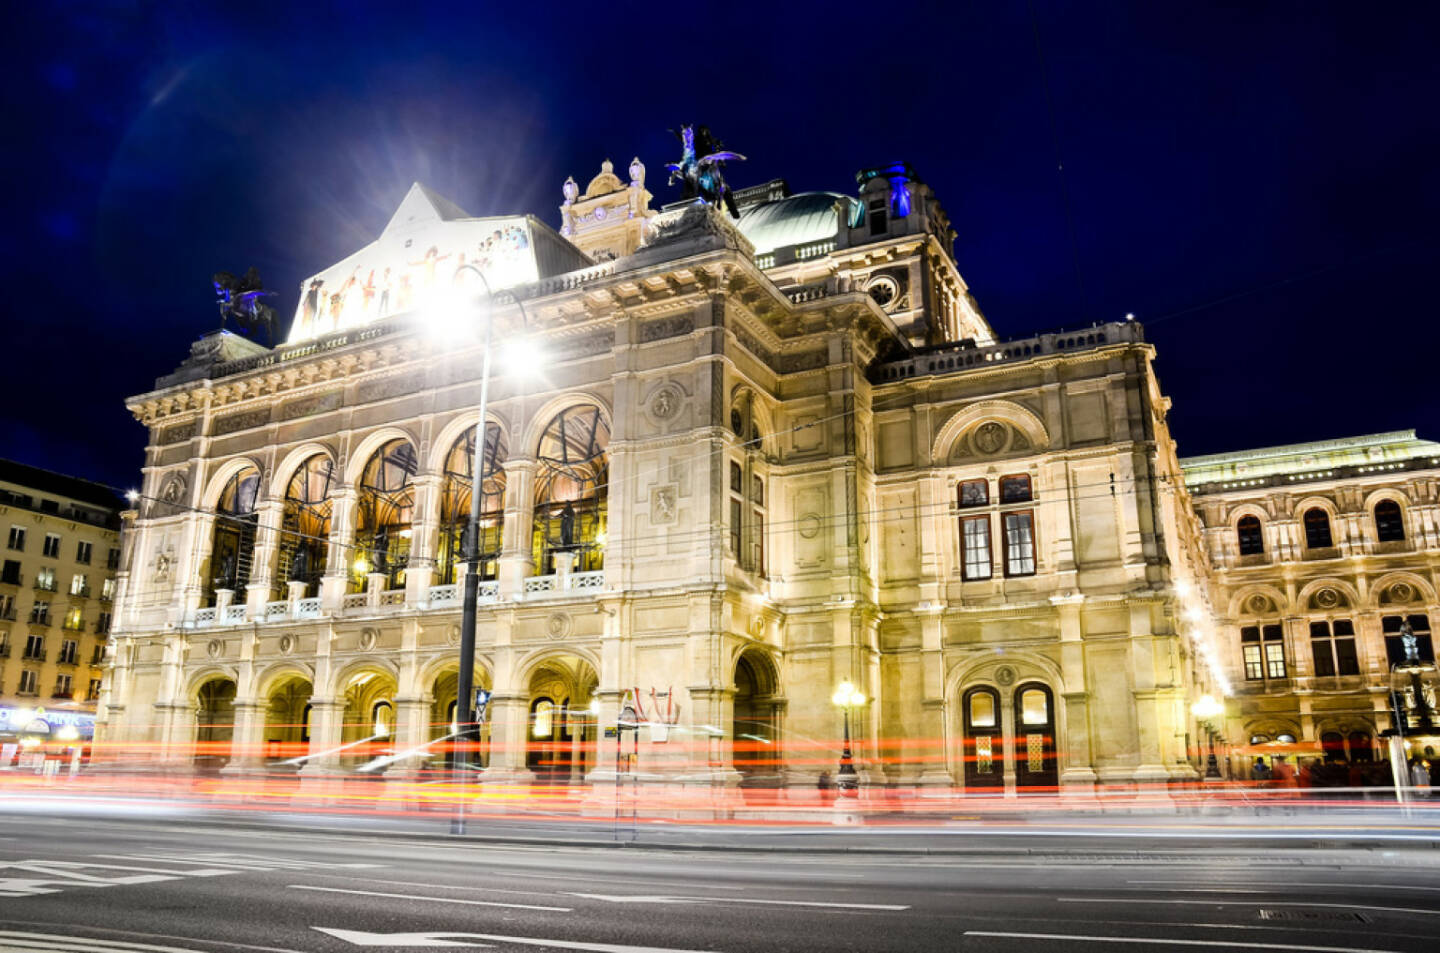 Oper, Staatsoper, Wien, Österreich, http://www.shutterstock.com/de/pic-135621317/stock-photo-night-view-at-opera.html 